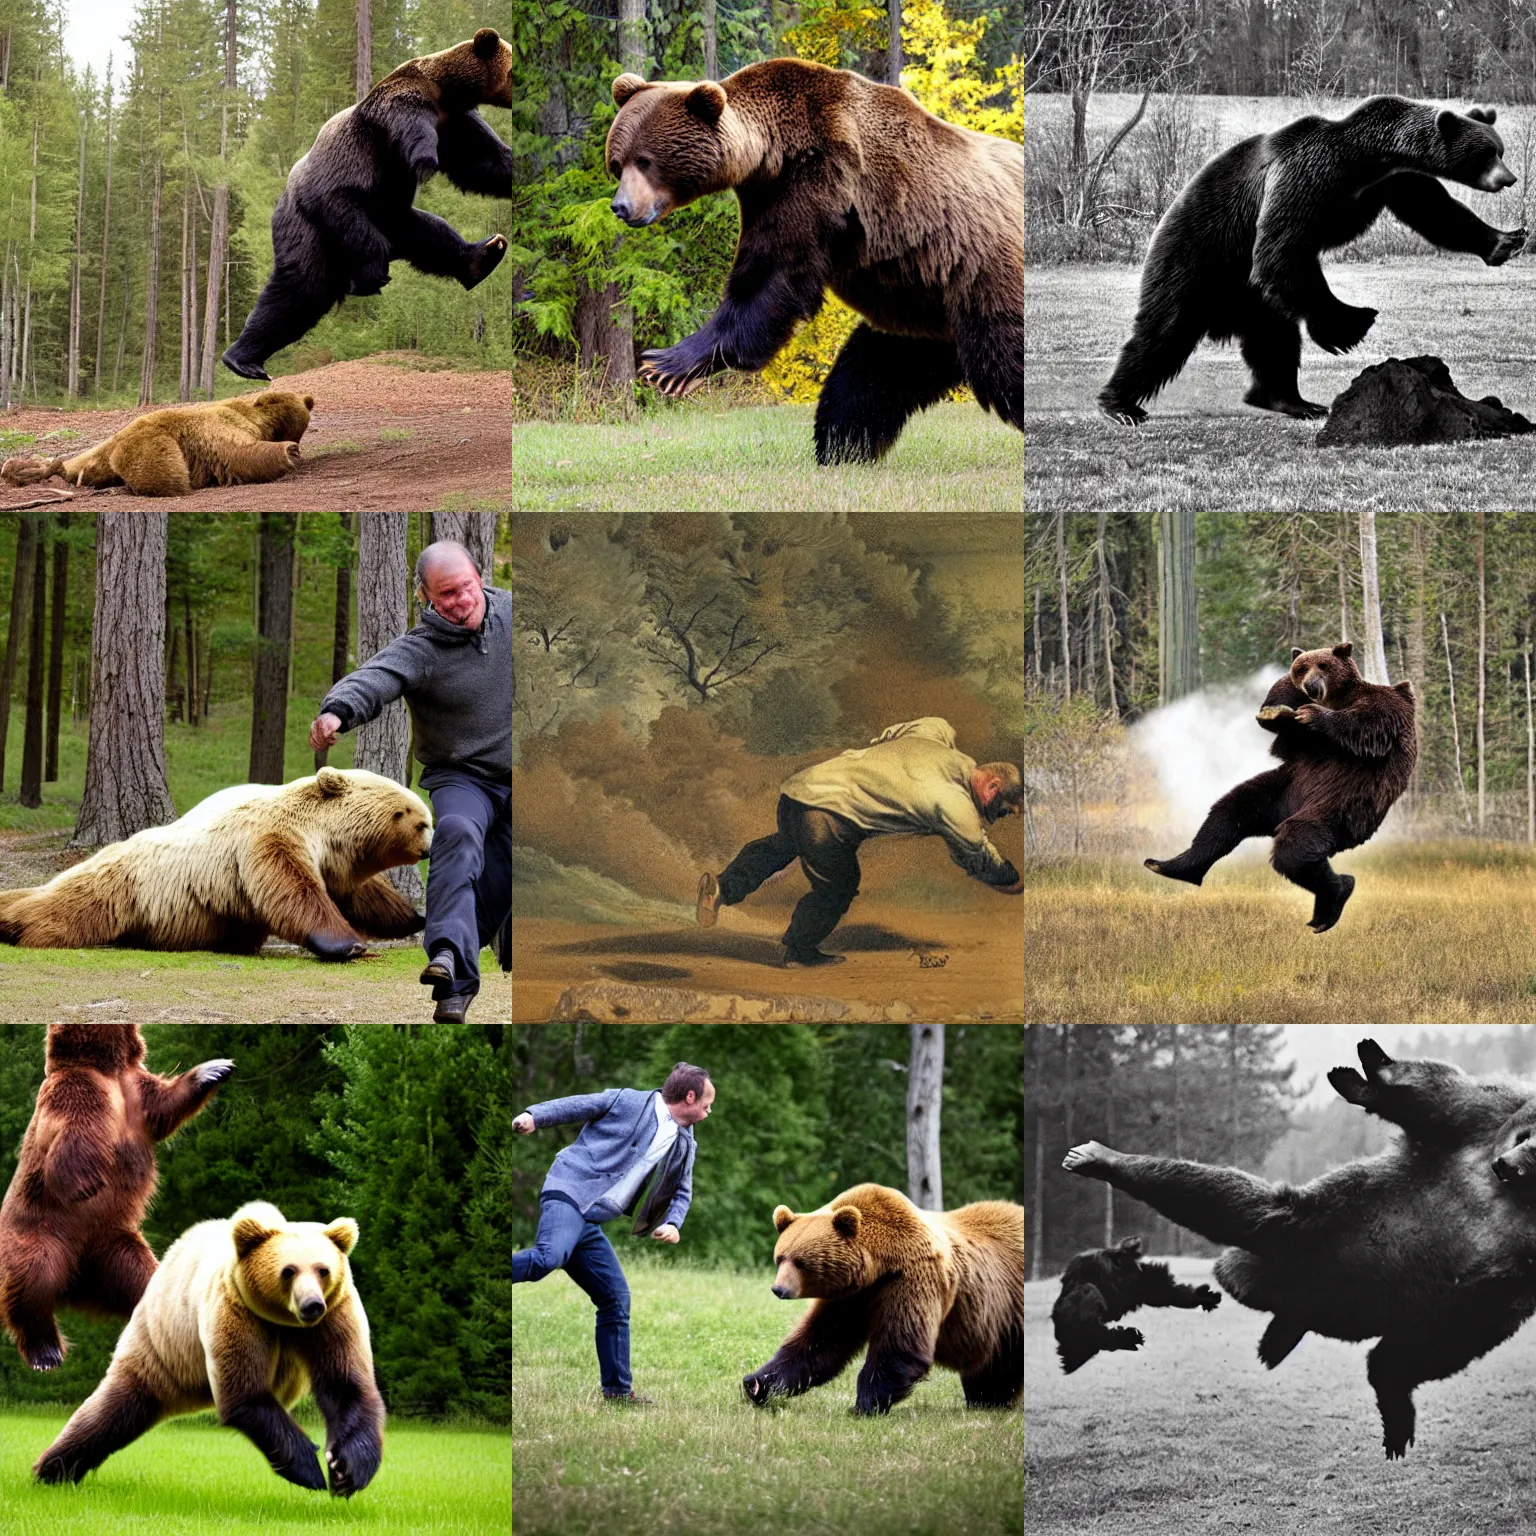 Prompt: photo, A man kicking a bear.